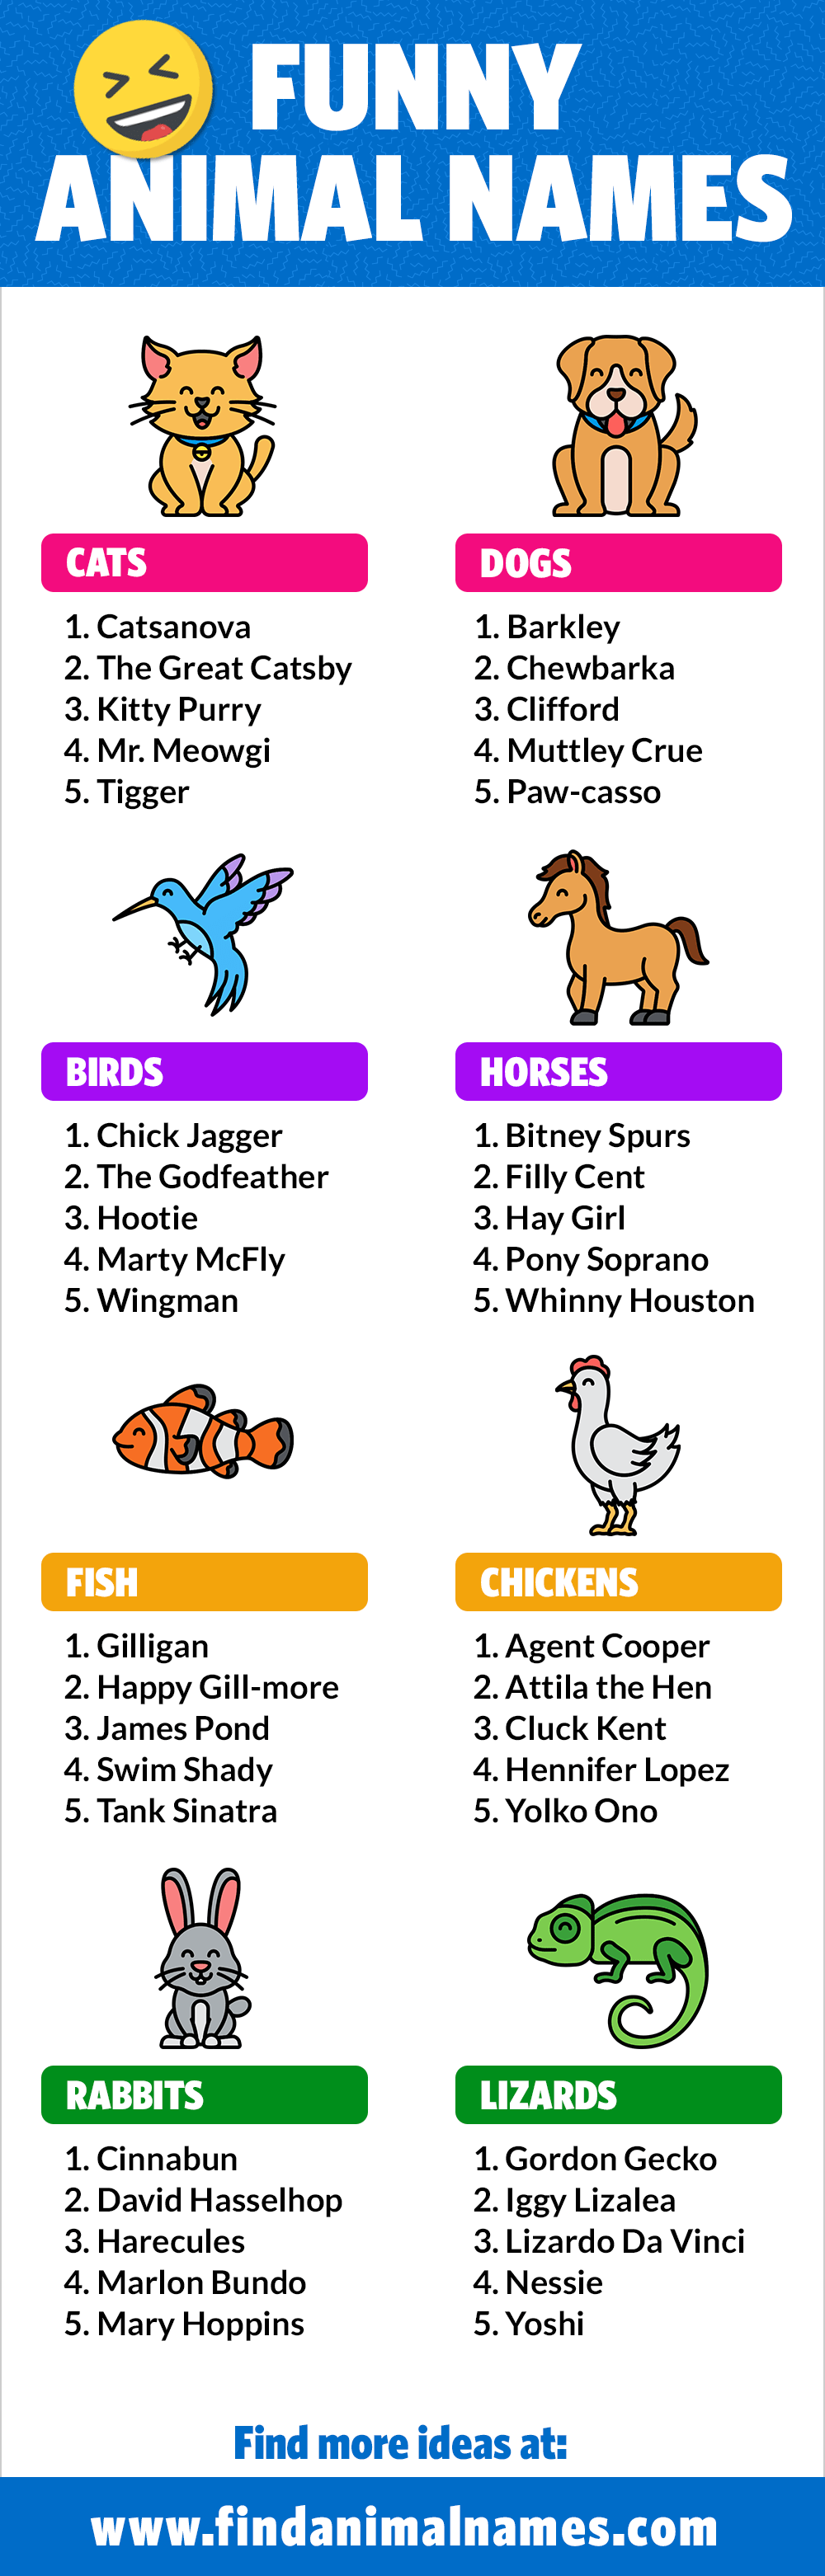 Funny Animal Names - NamesNerd